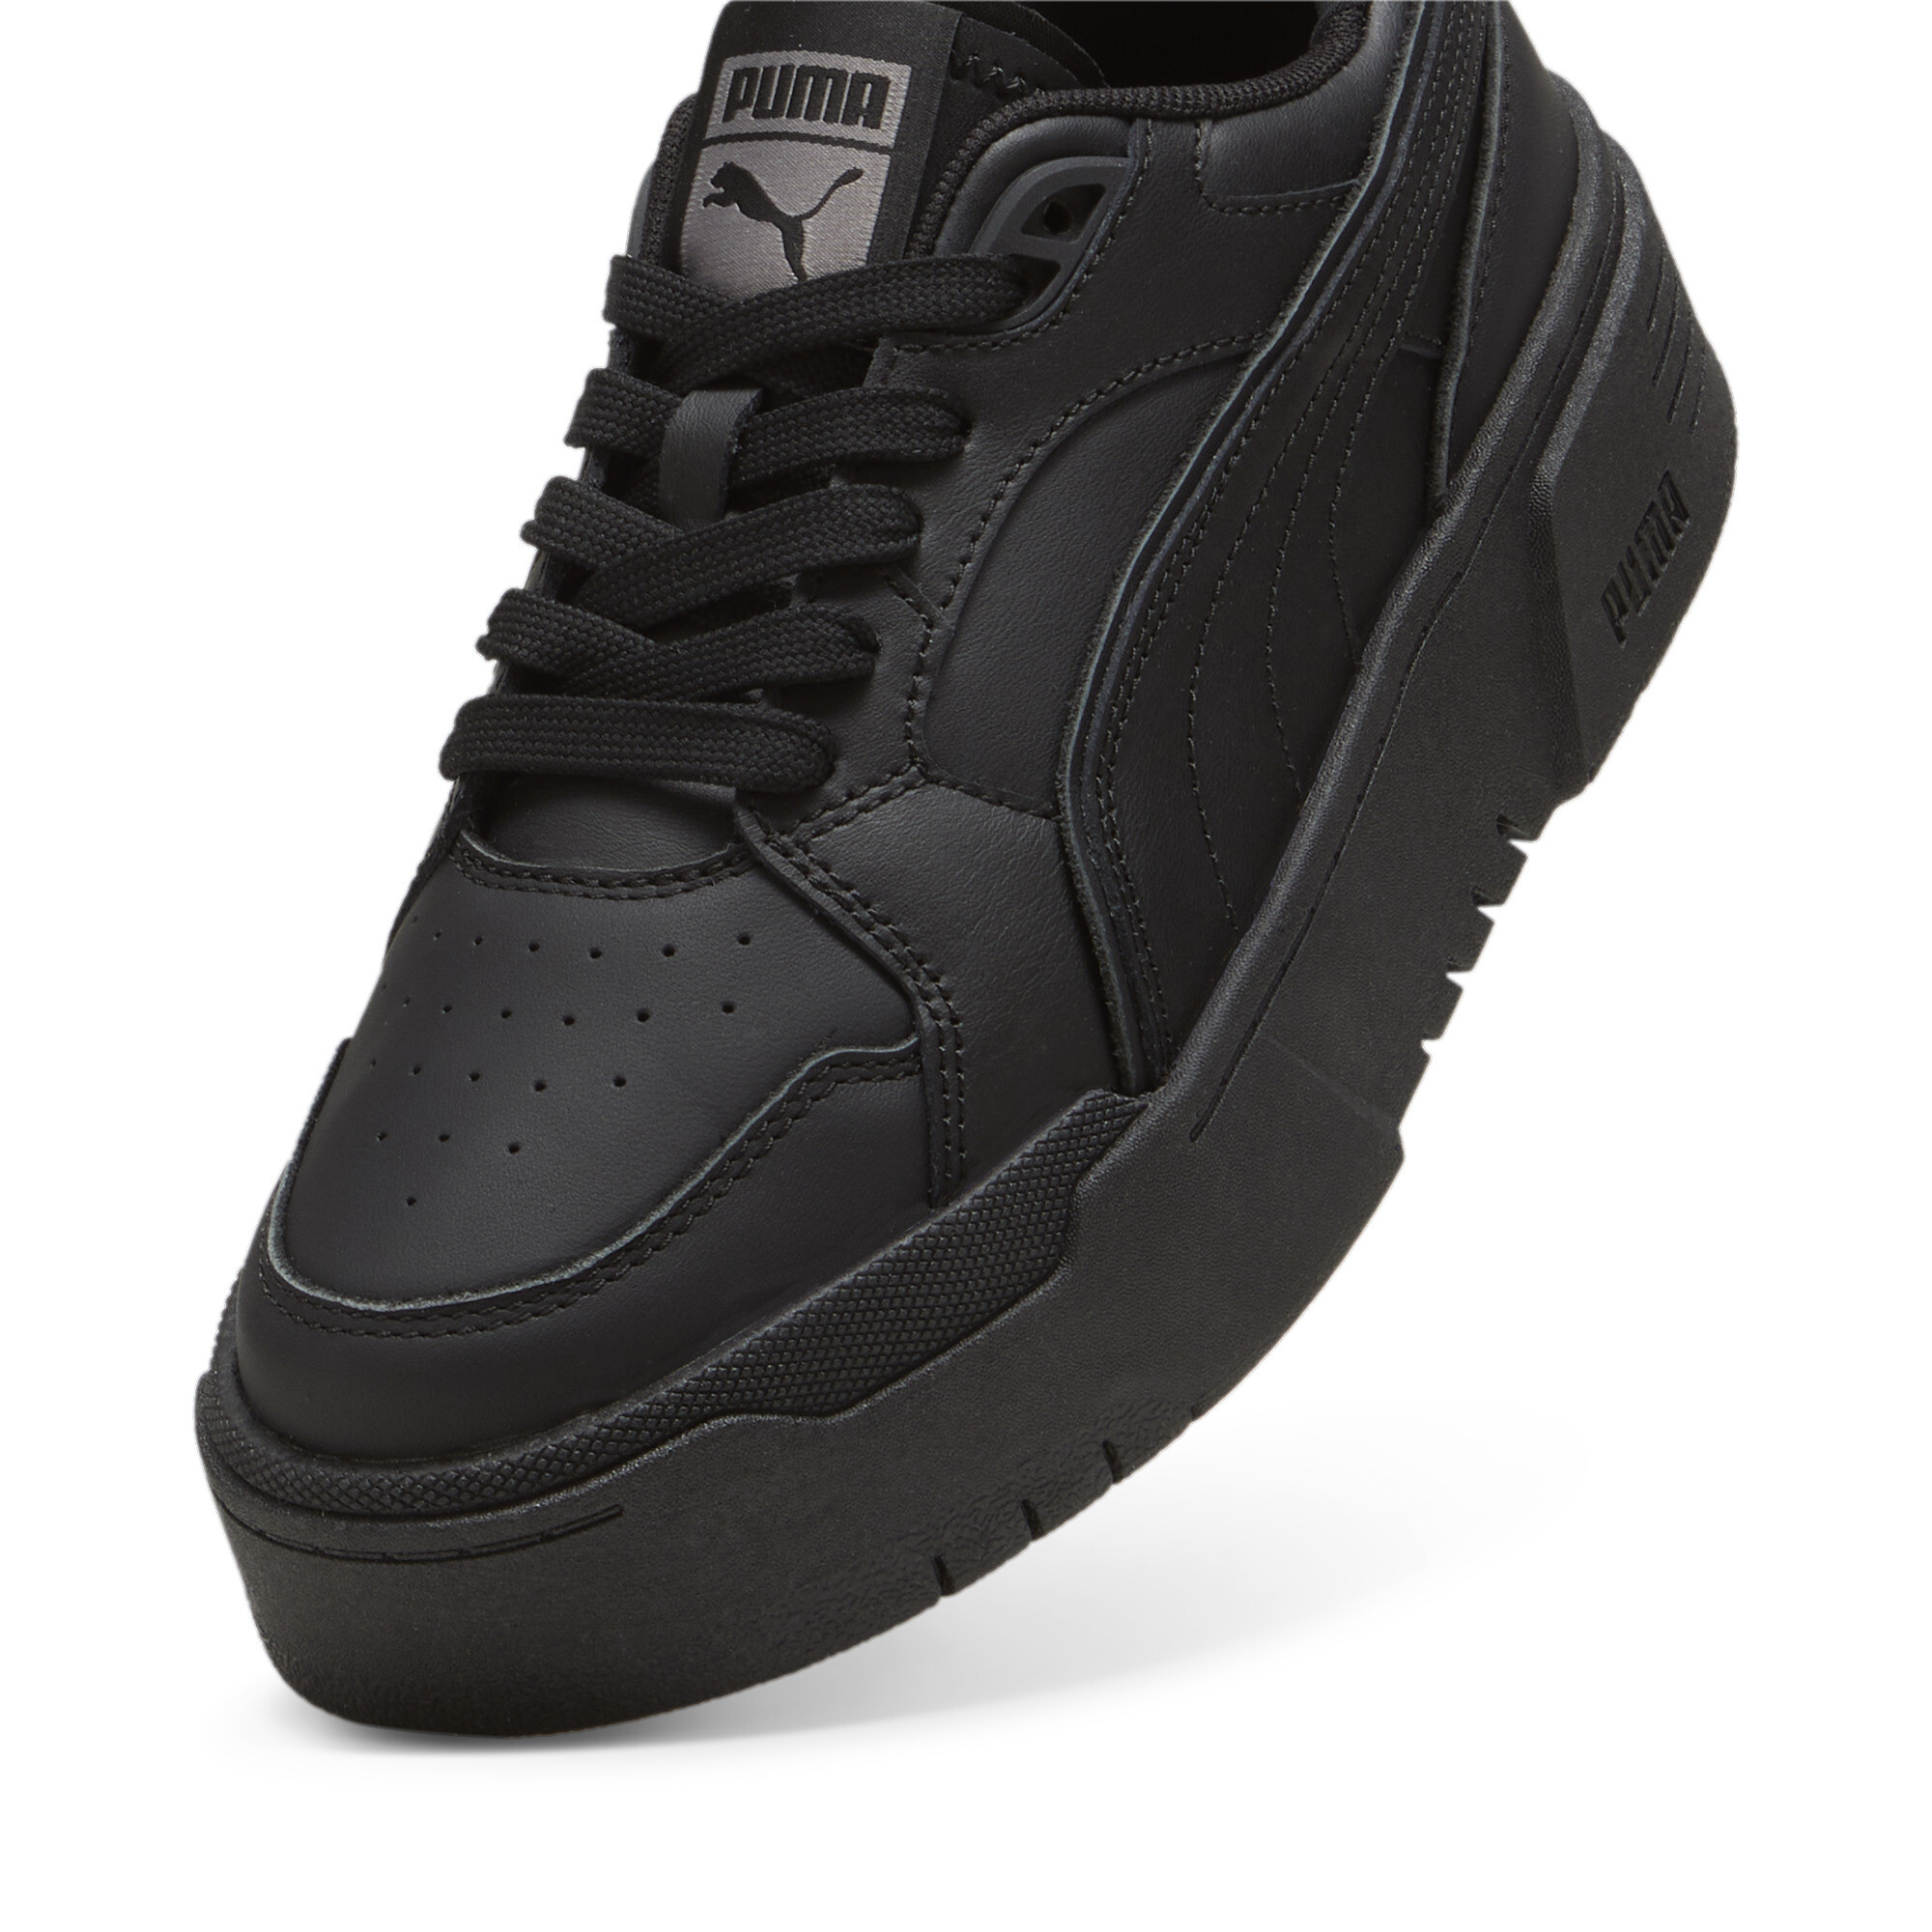 Women's Puma CA. Flyz's Sneakers, Black, Size 36, Shoes